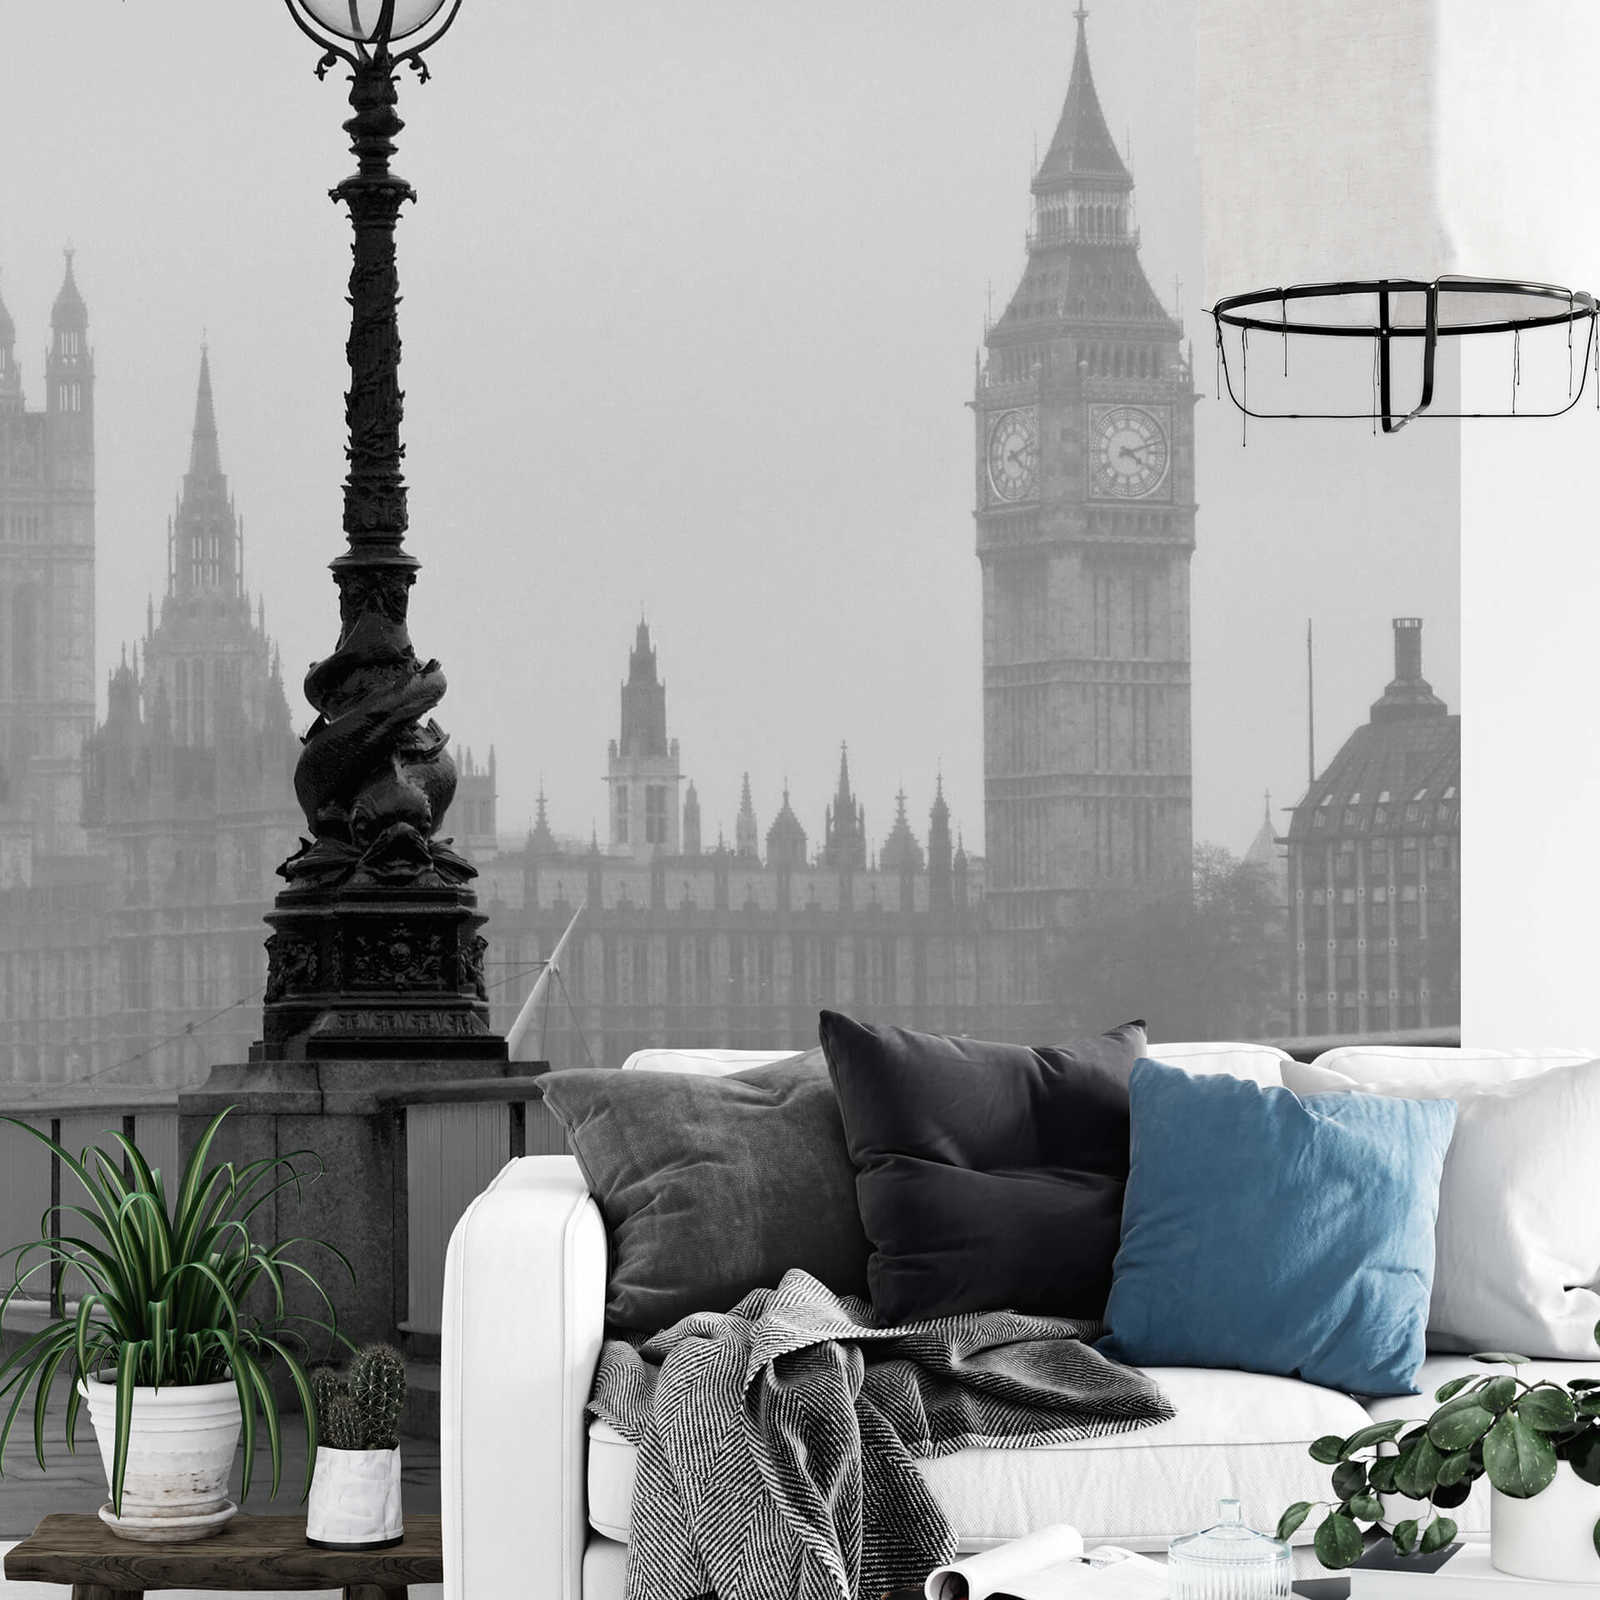             Fototapete London Stadt im Nebel – Schwarz, Weiß, Grau
        